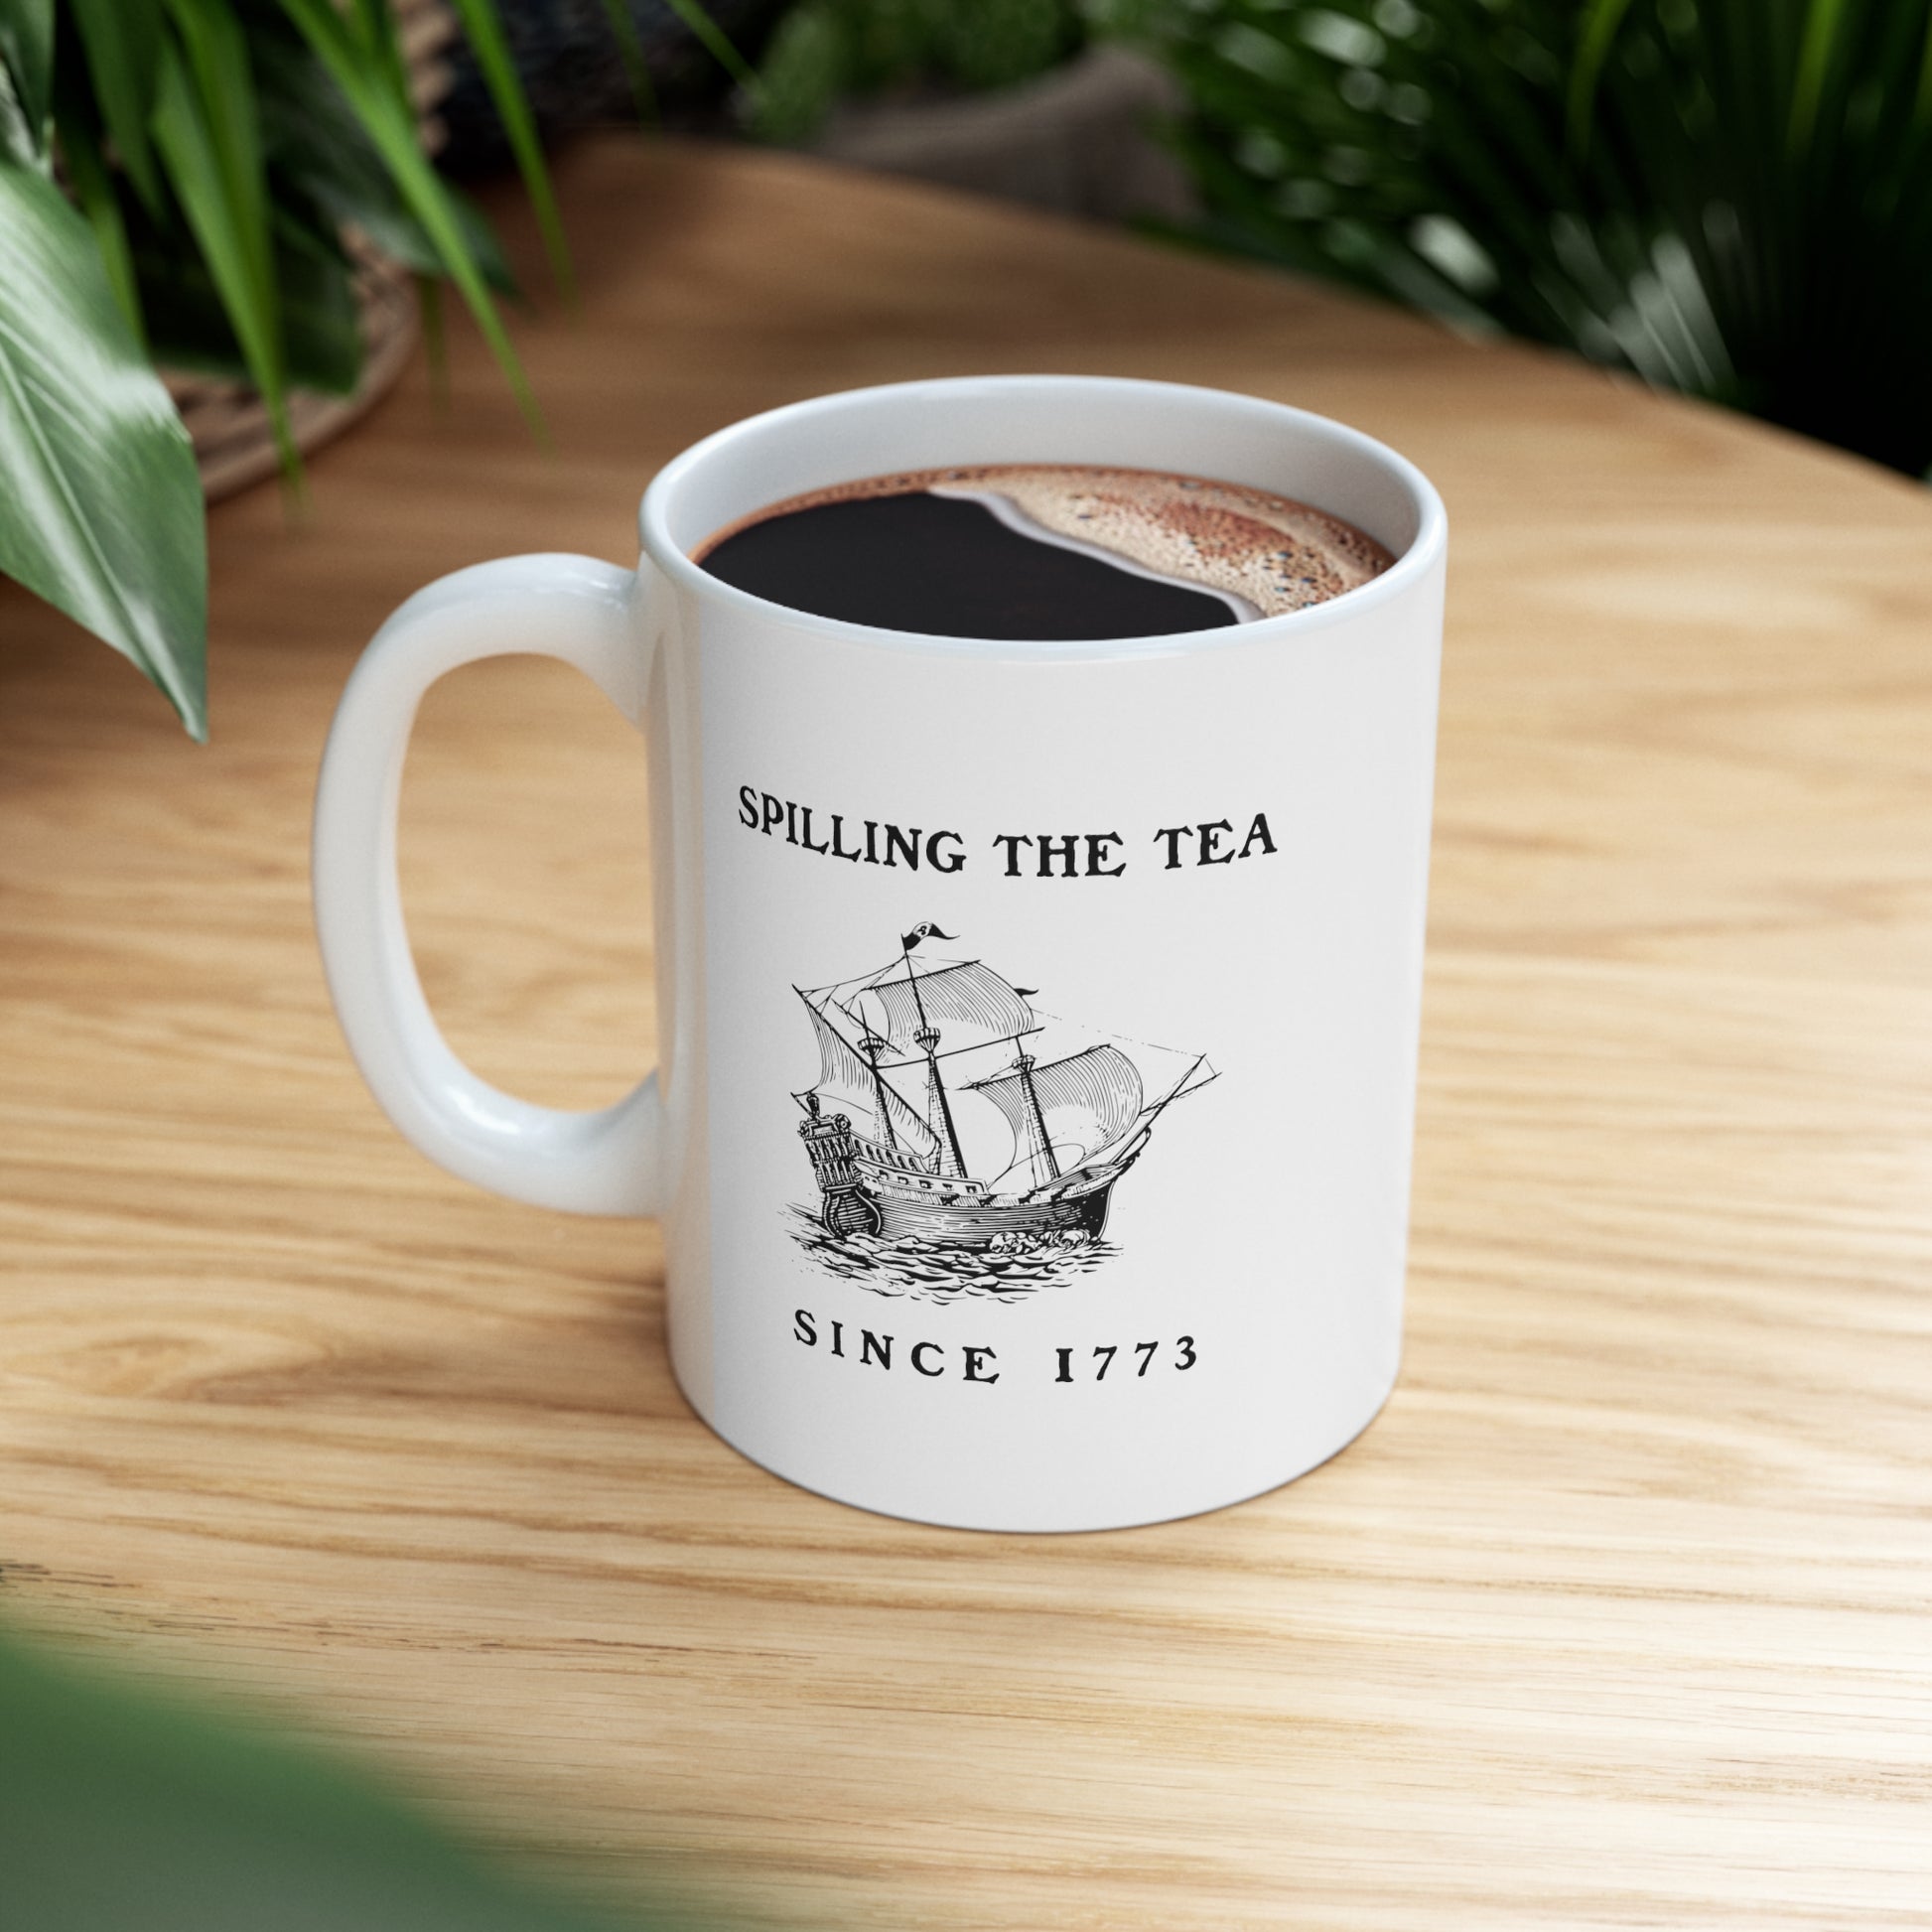 Clever Boston Tea Party pun on a high-quality coffee mug